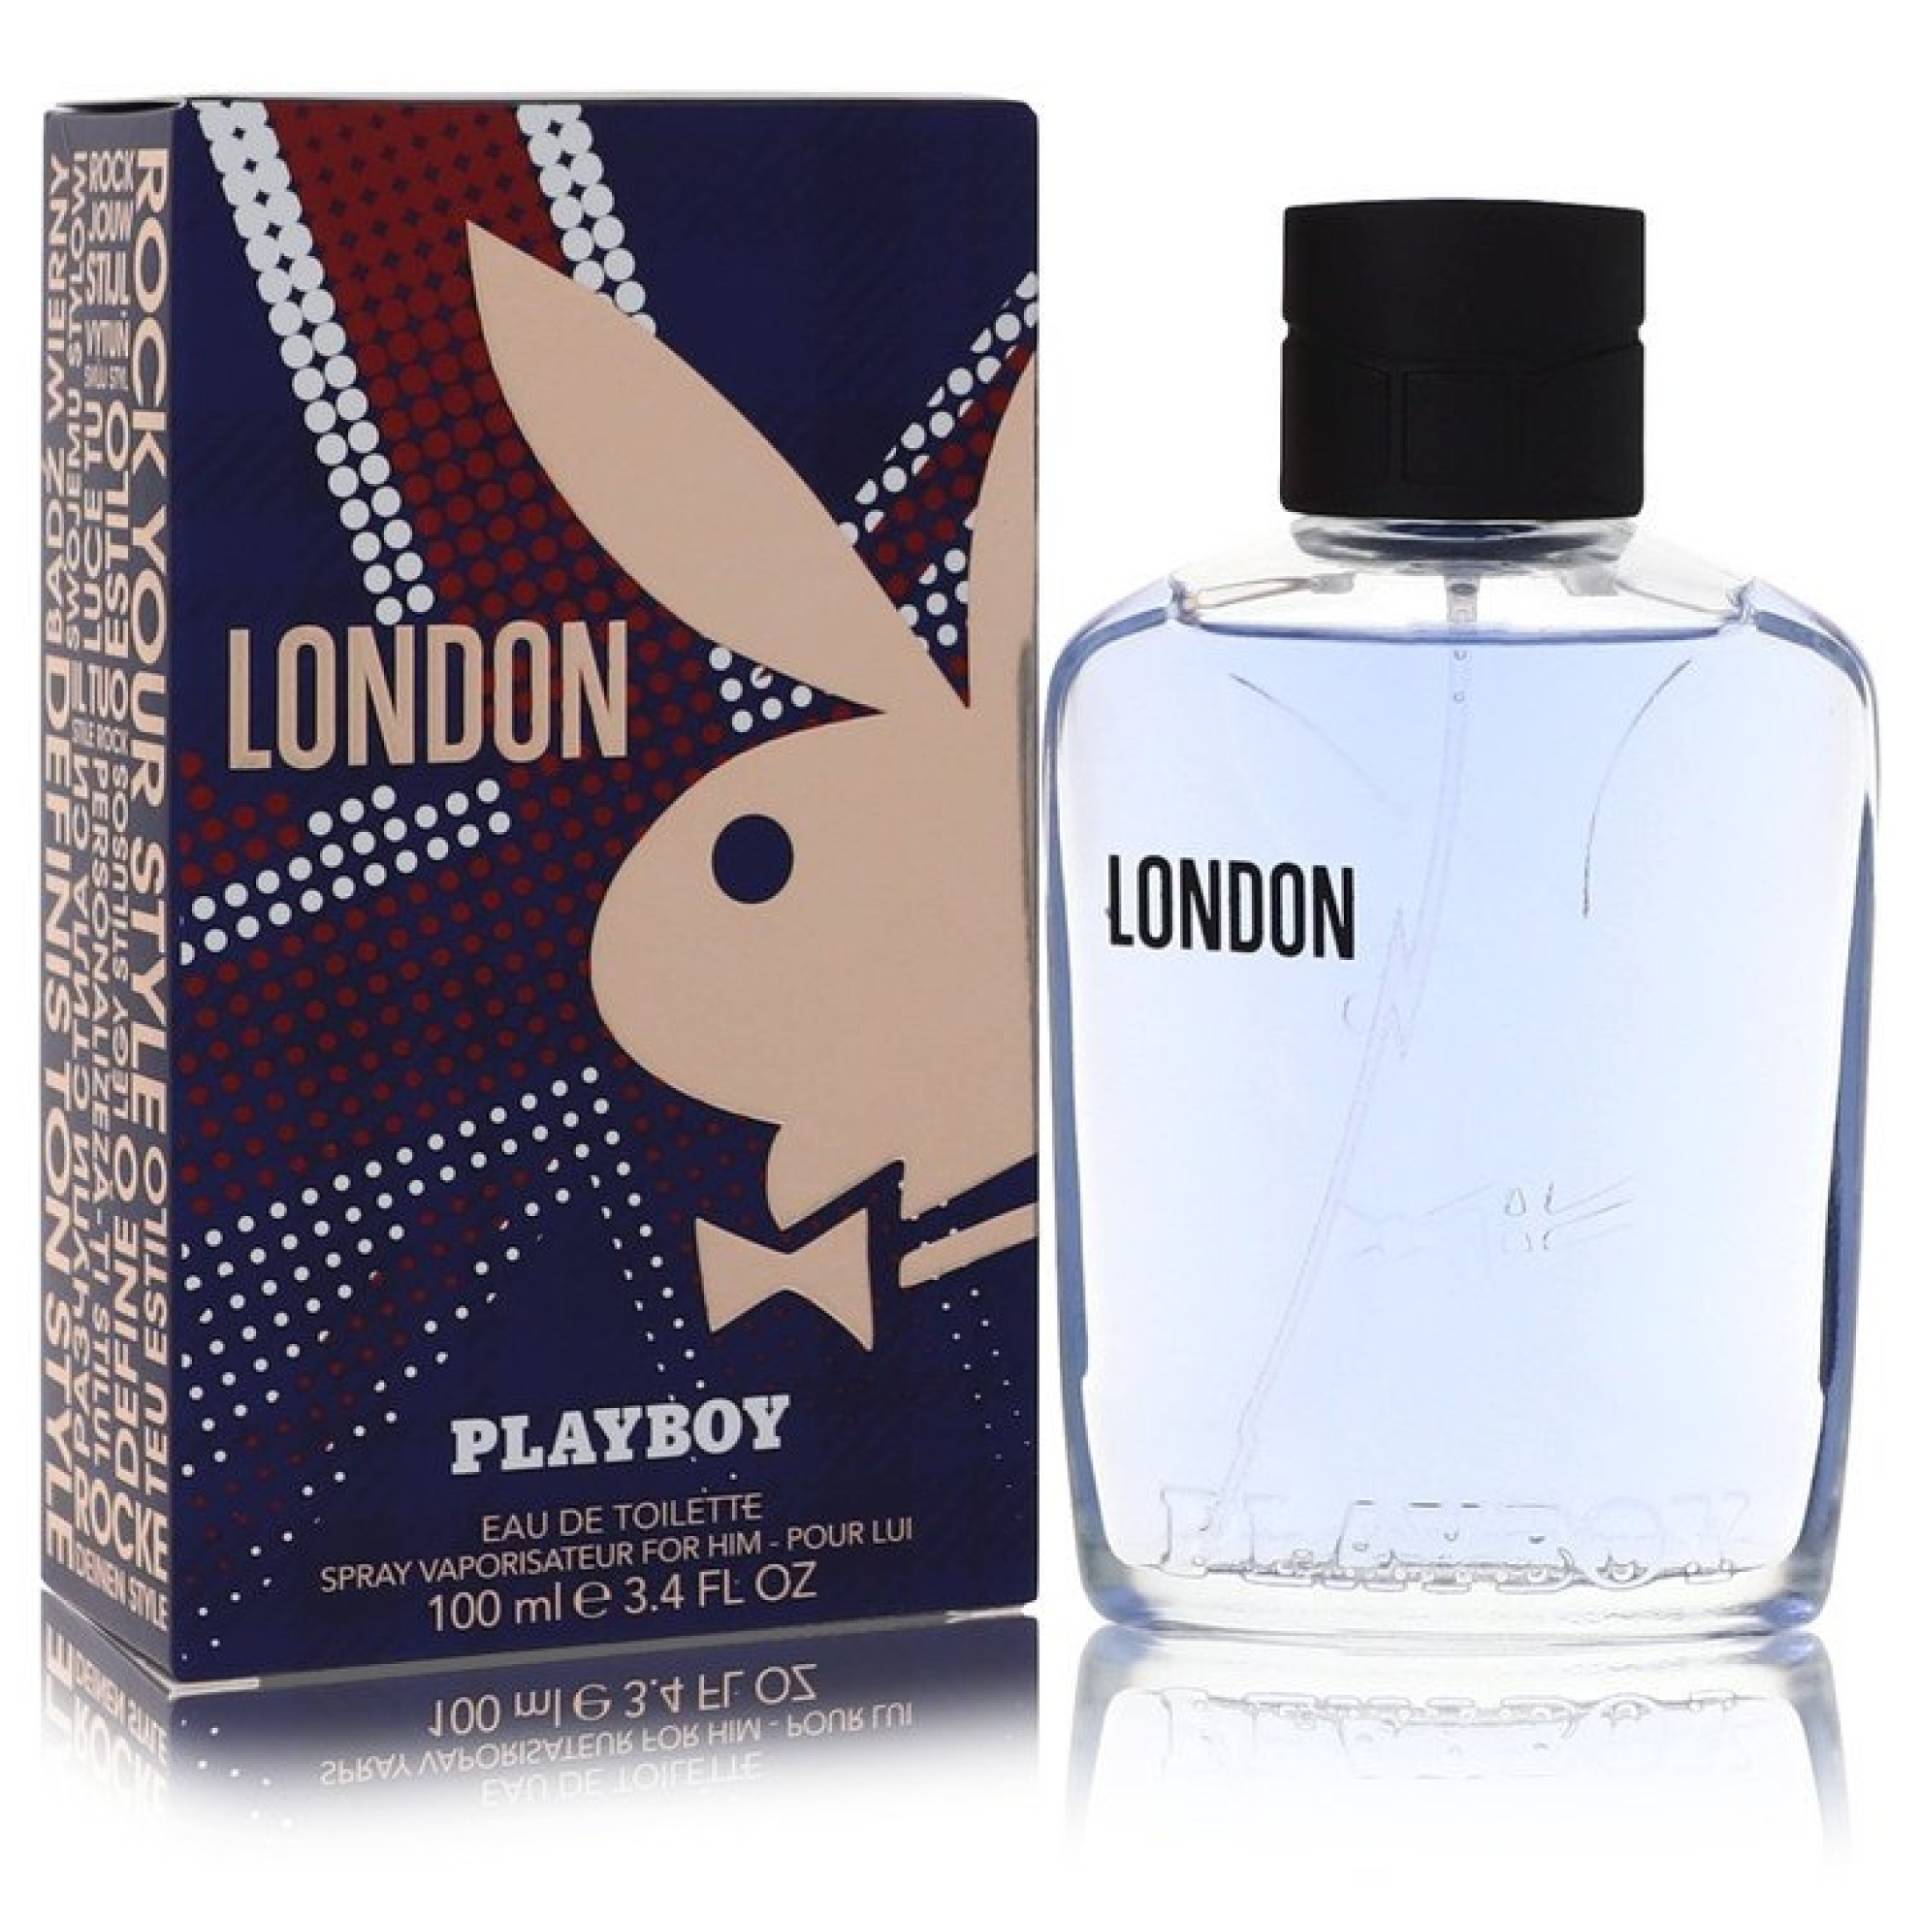 Playboy London Eau De Toilette Spray 100 ml von Playboy